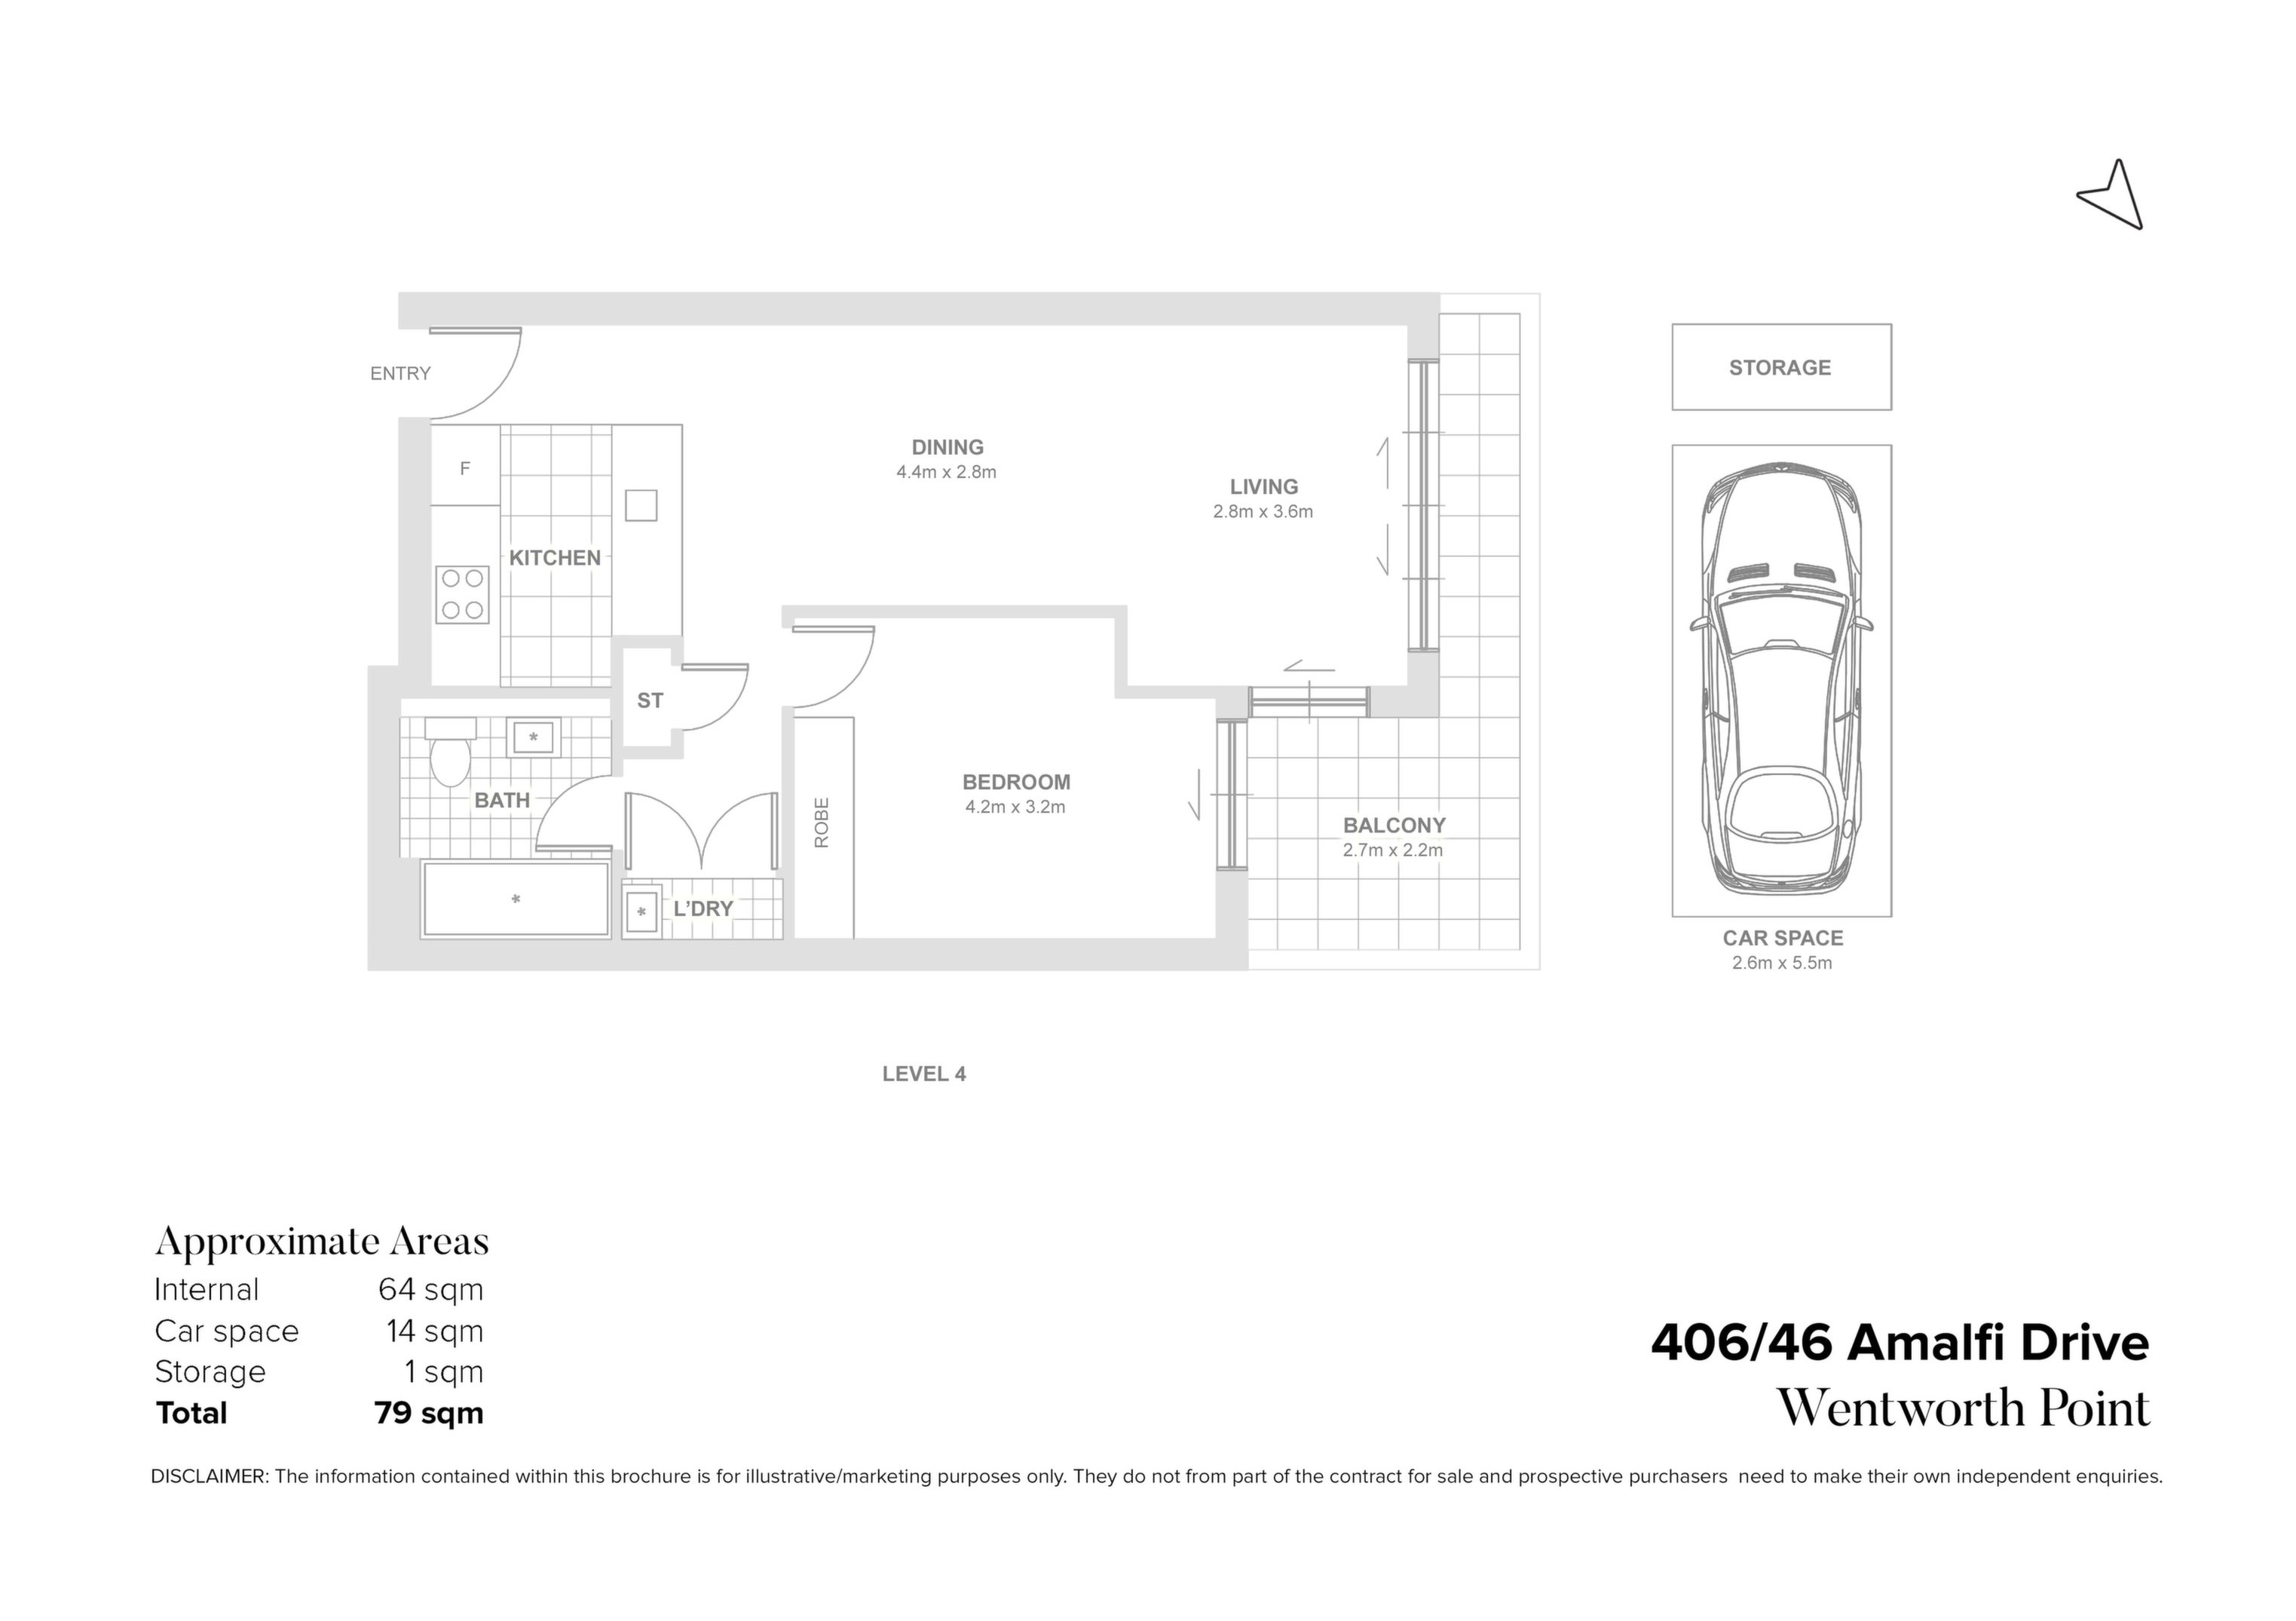 406/46 Amalfi Drive, Wentworth Point Sold by Chidiac Realty - floorplan